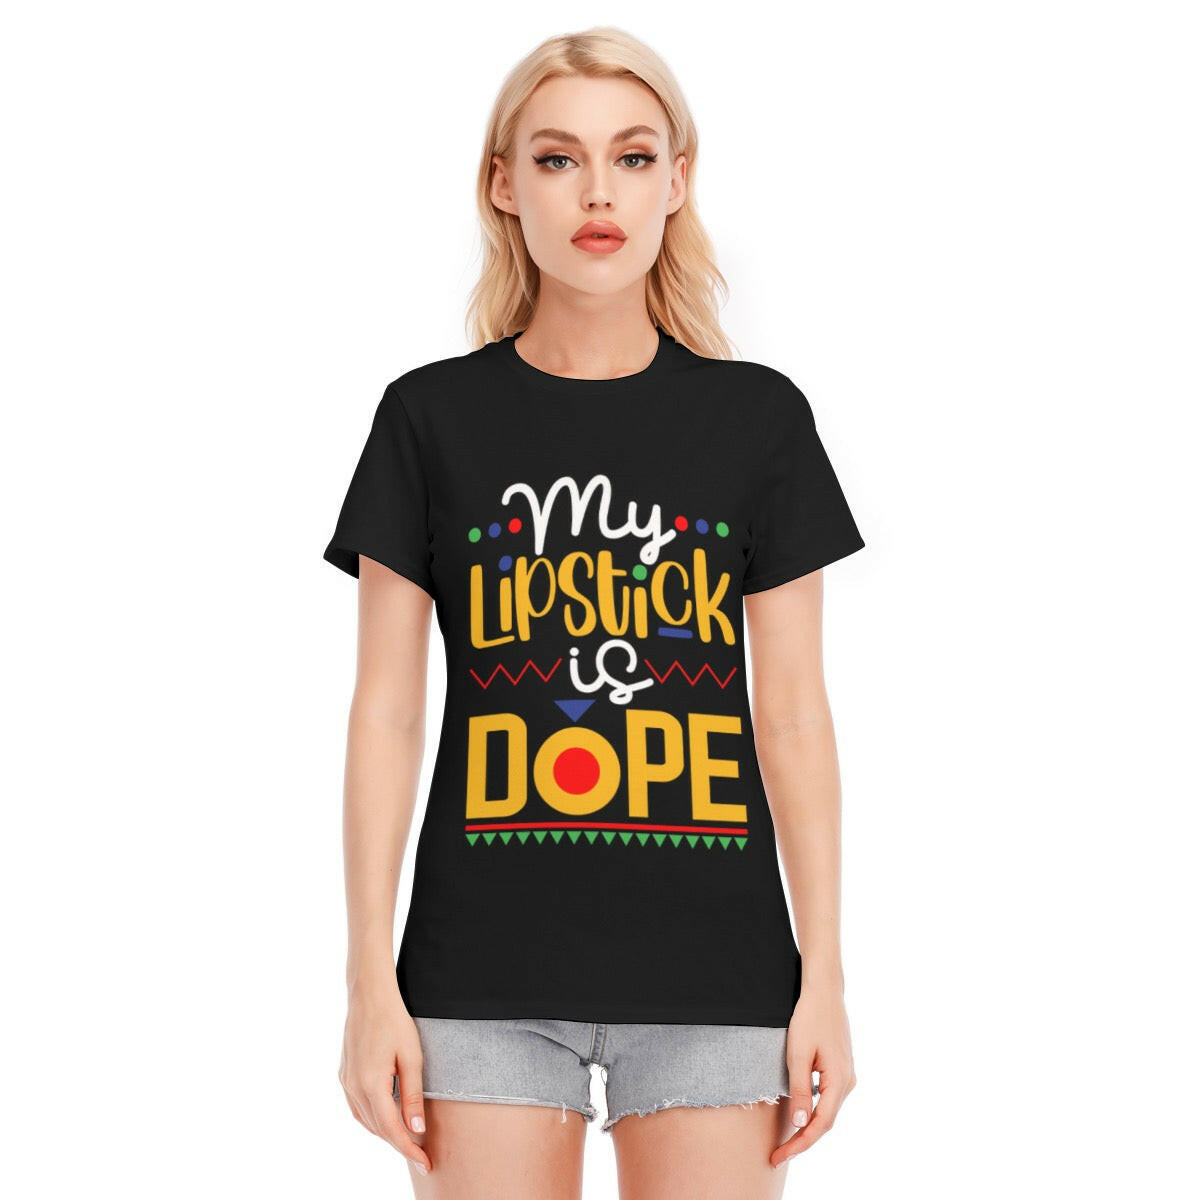 Lipstick Is Dope - T-Shirt